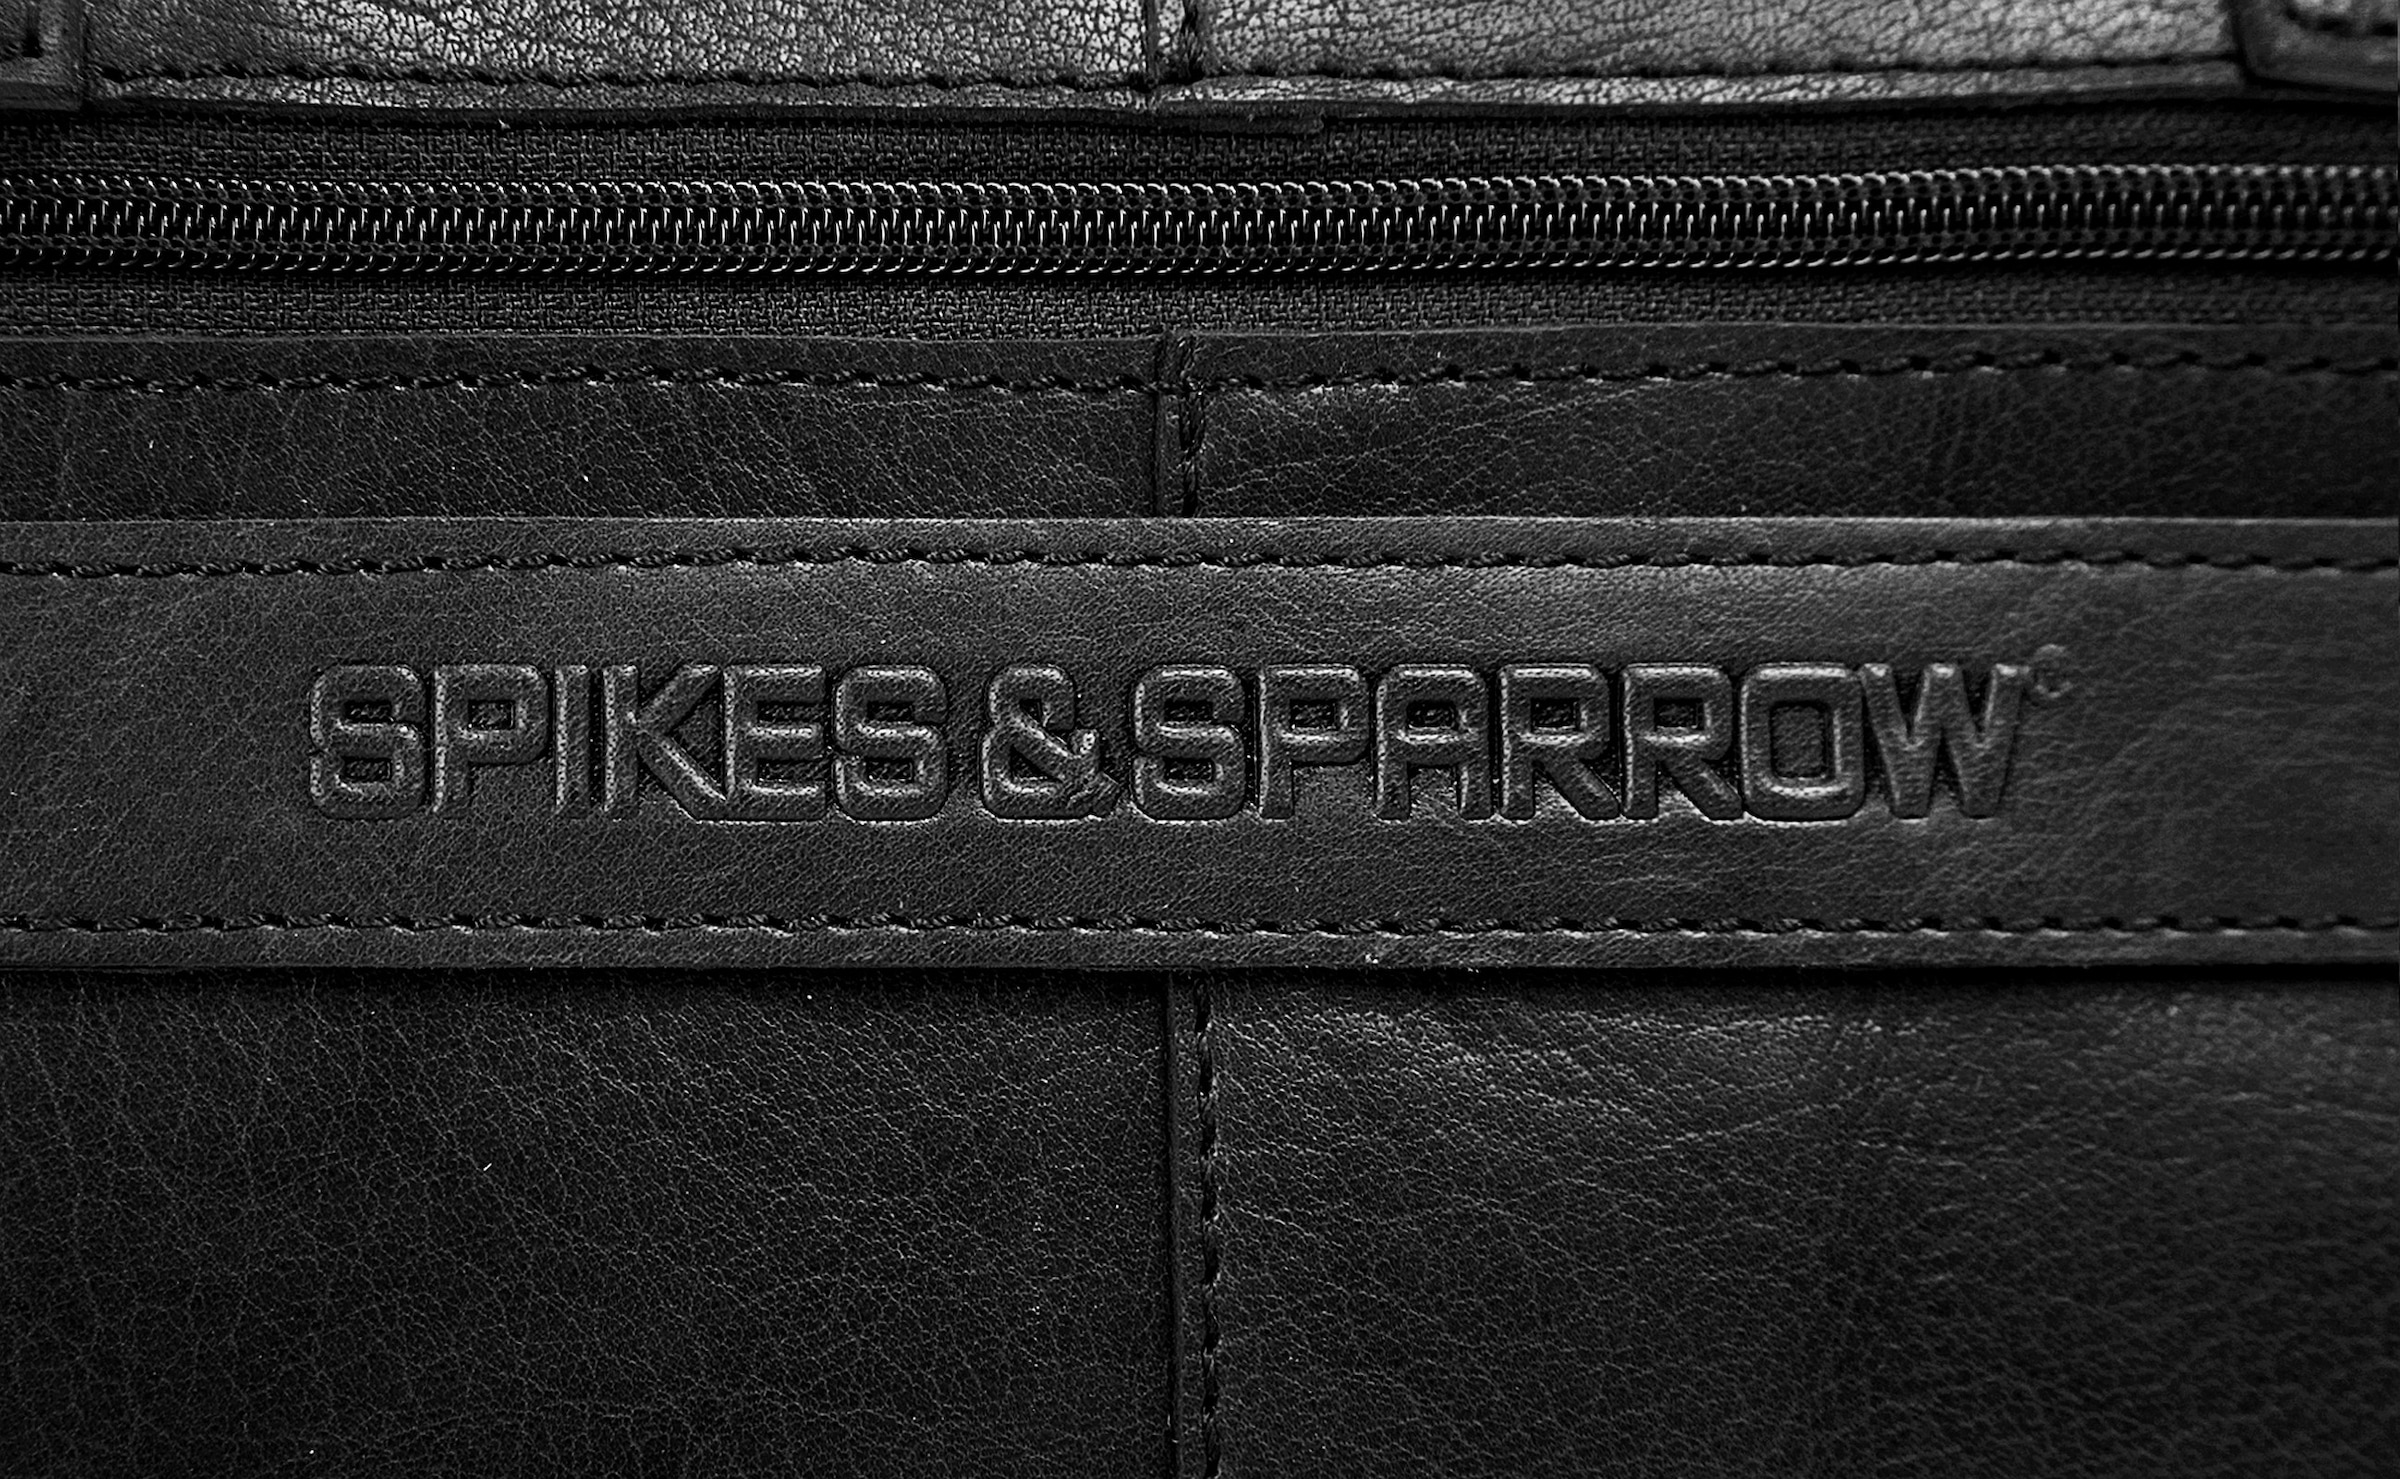 Spikes & Sparrow Aktentasche, echt Leder